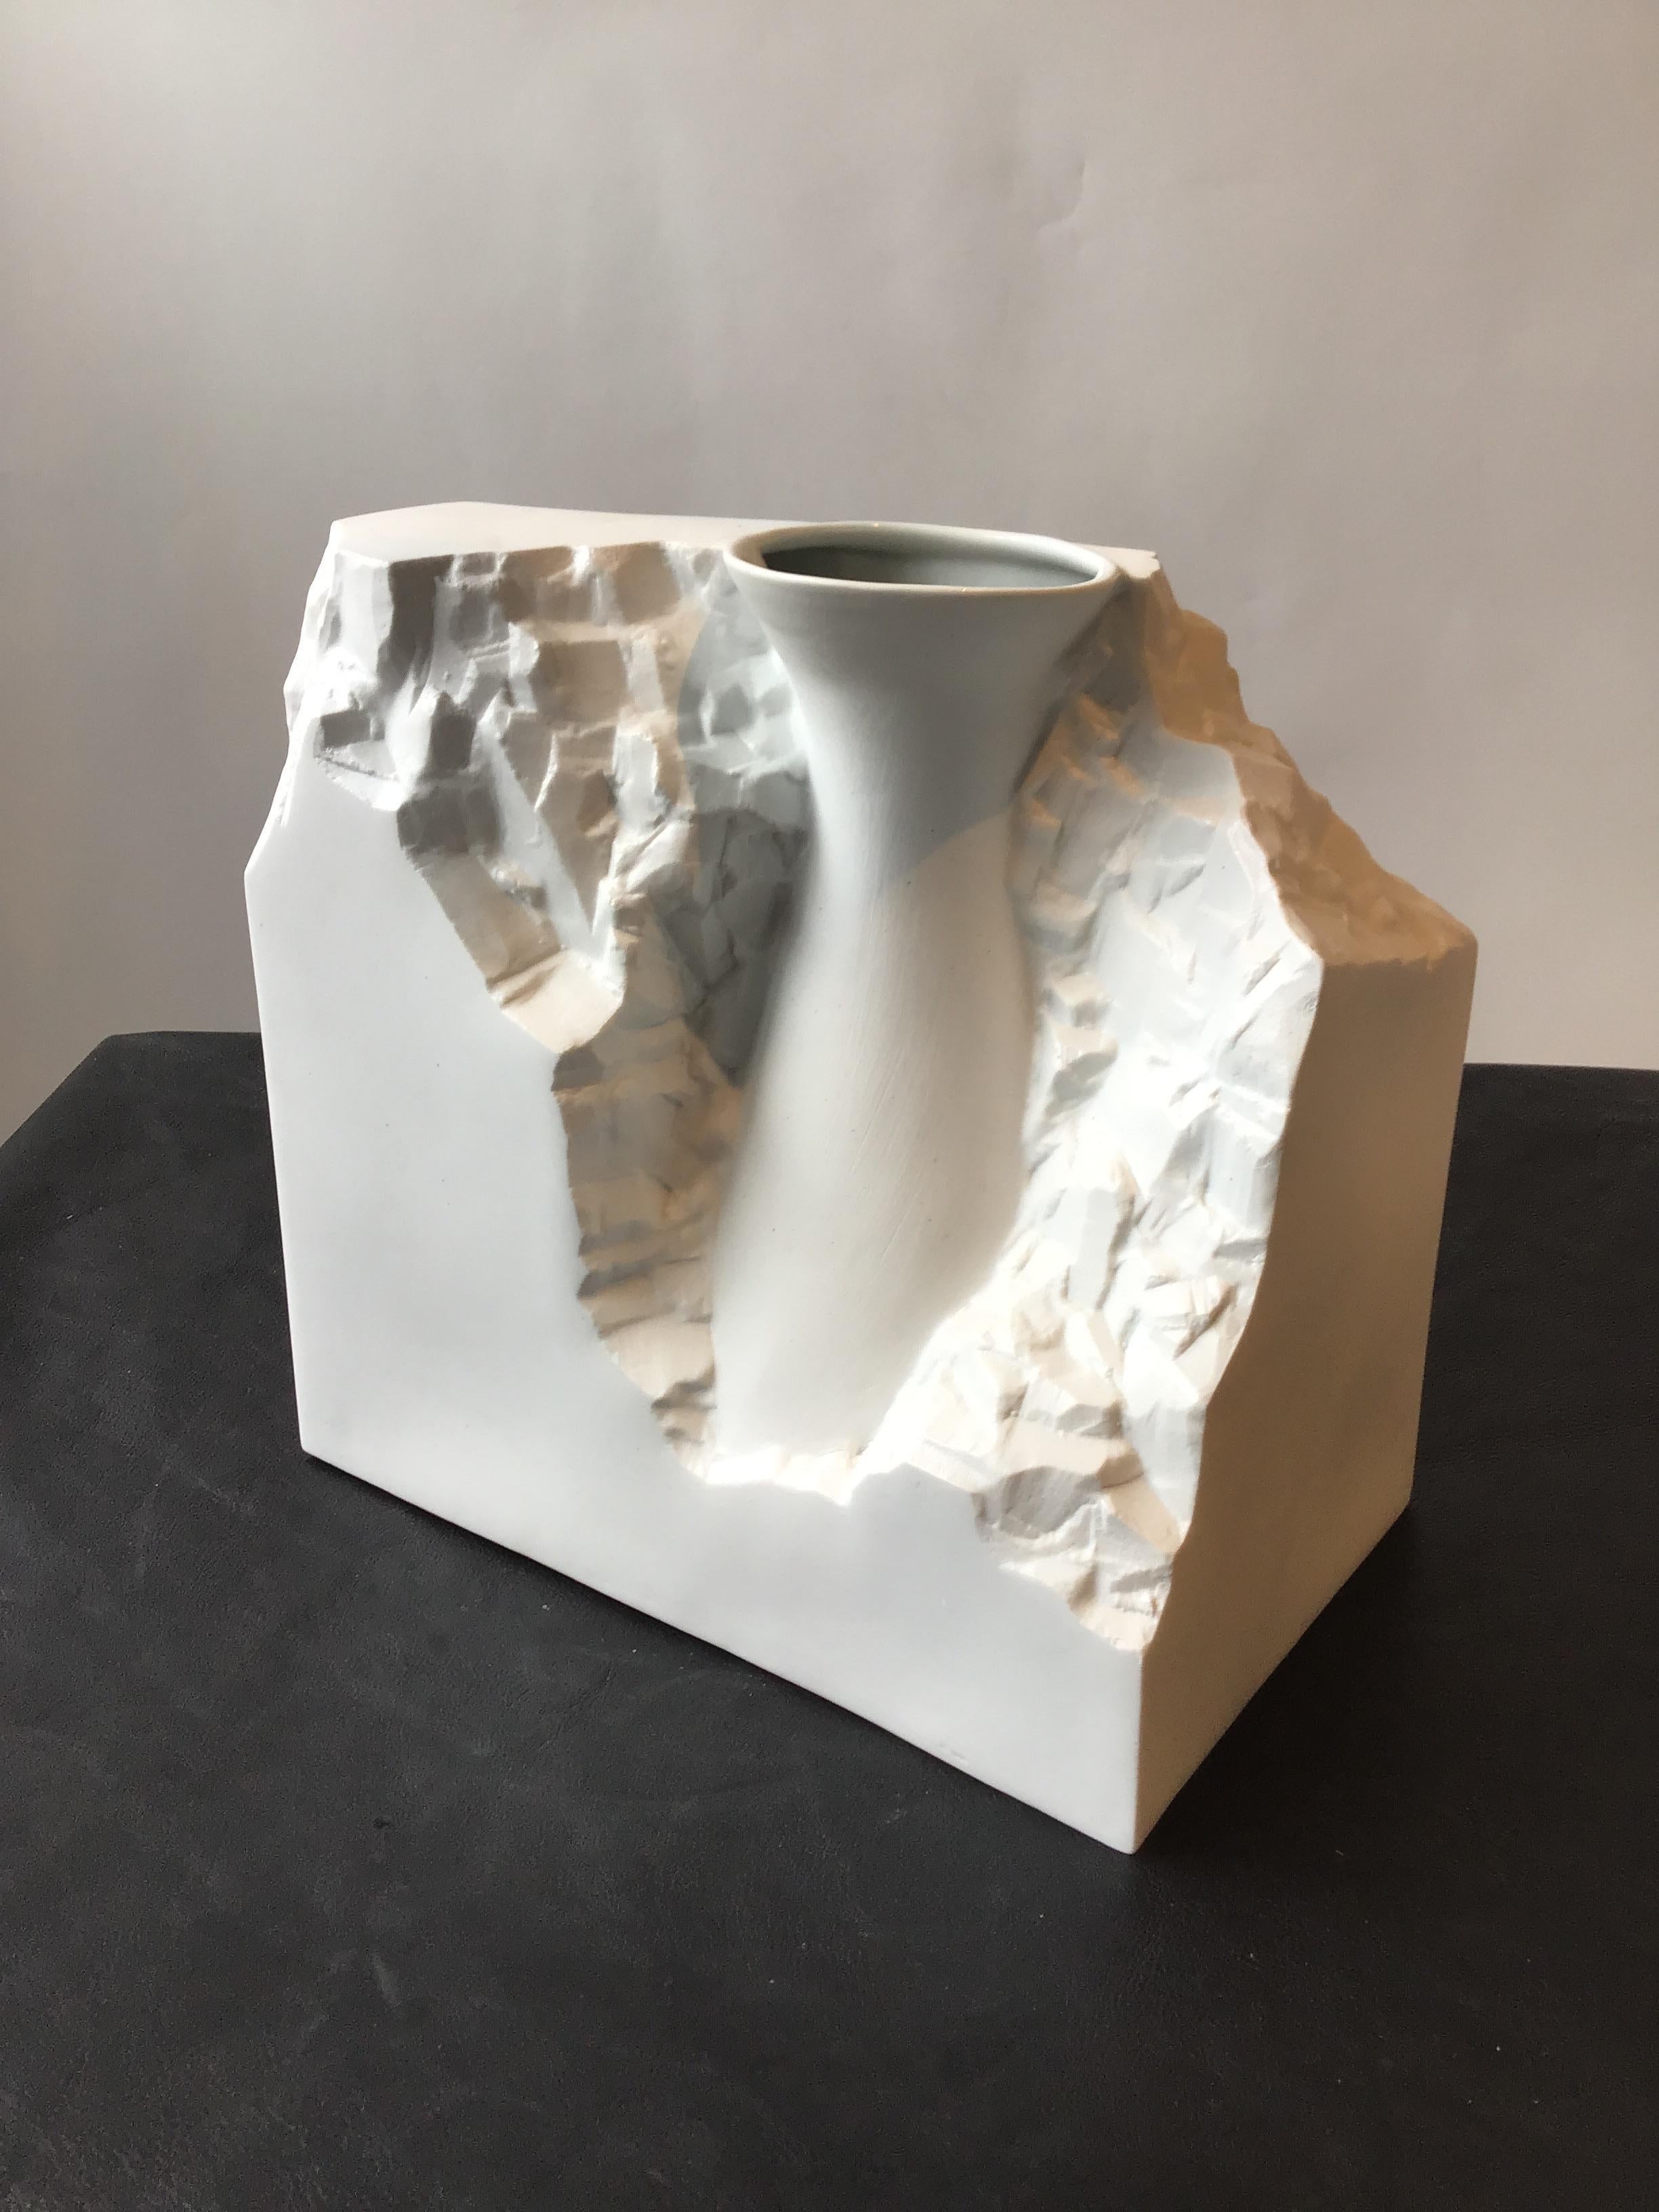 Spin ceramics vase in a mold. New.